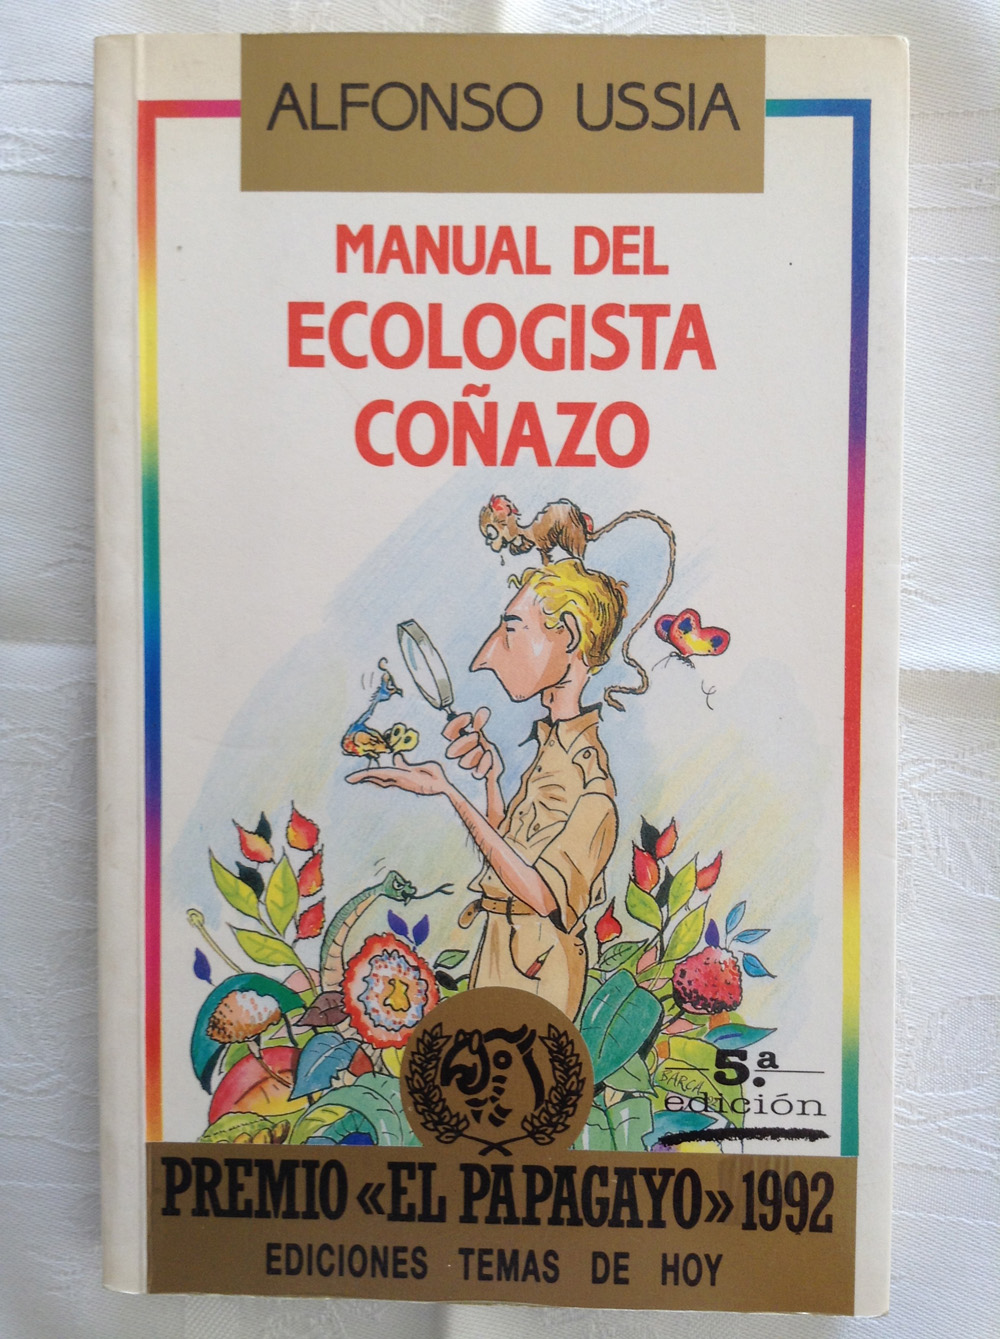 Manual del ecologista coñazo